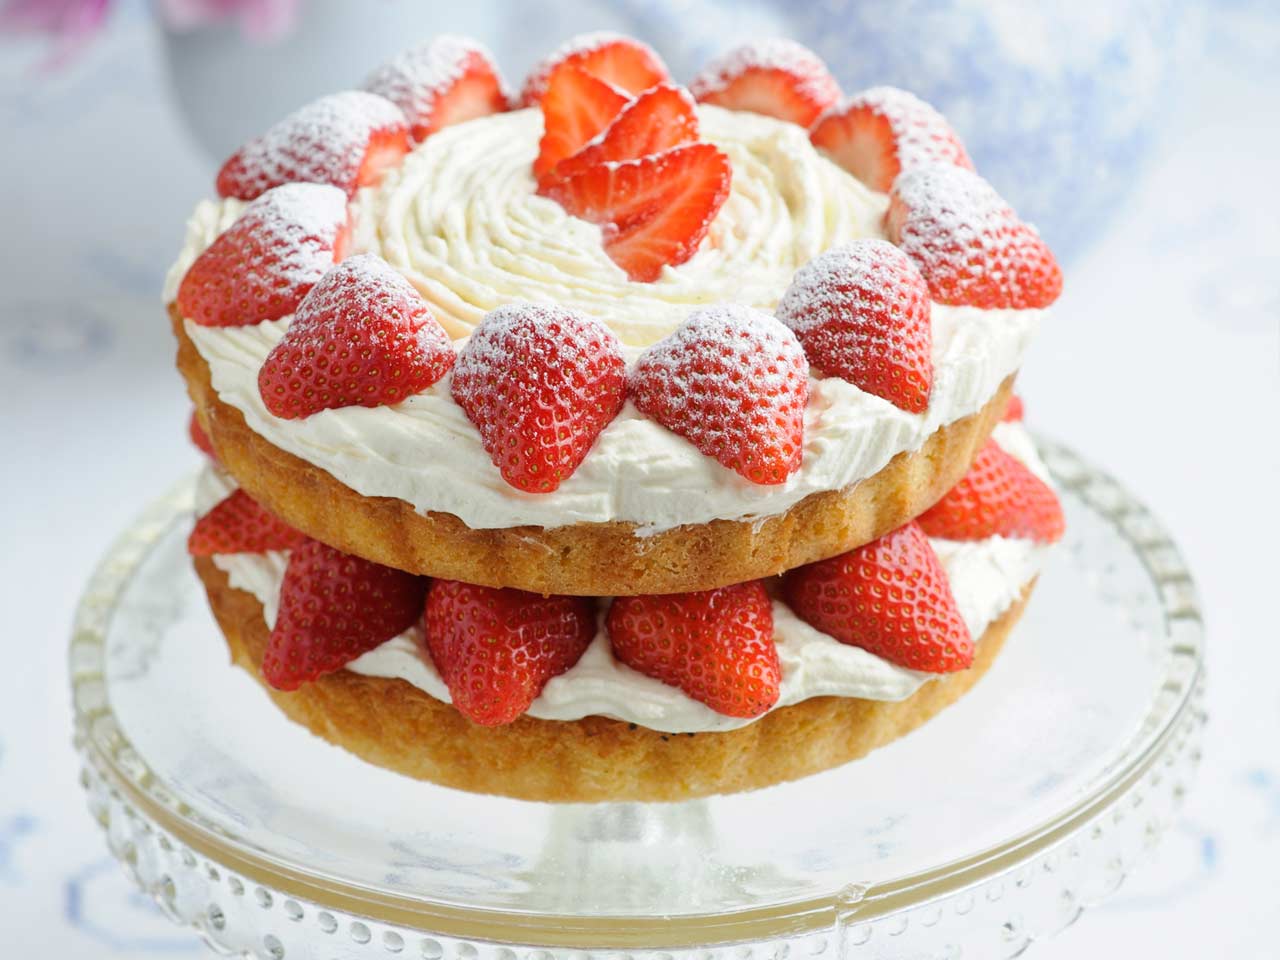 Victoria sponge with fresh strawberries and cream